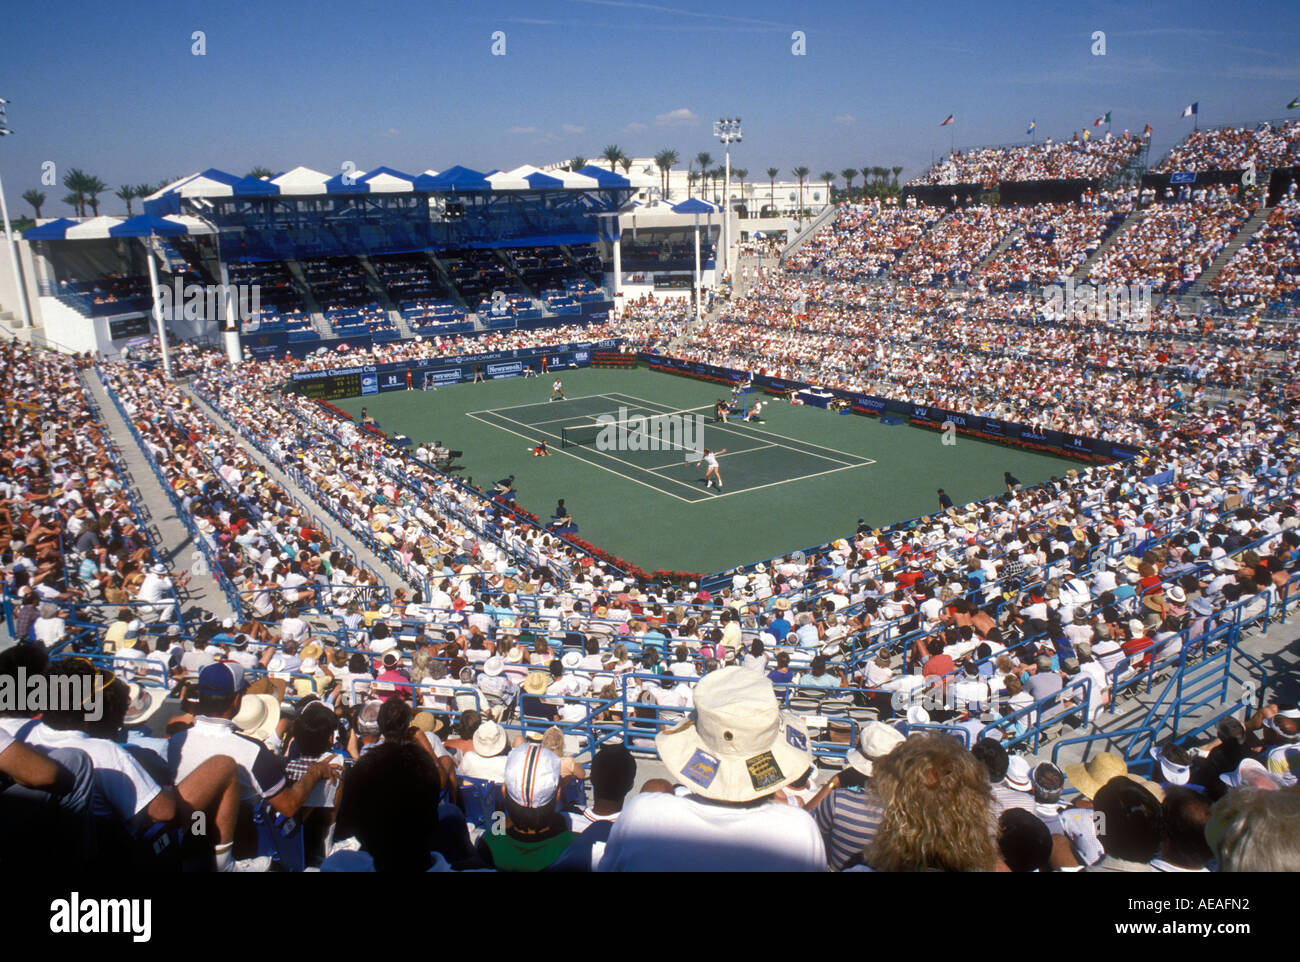 Crowd watching tennis tournament at Indian Wells California Stock Photo